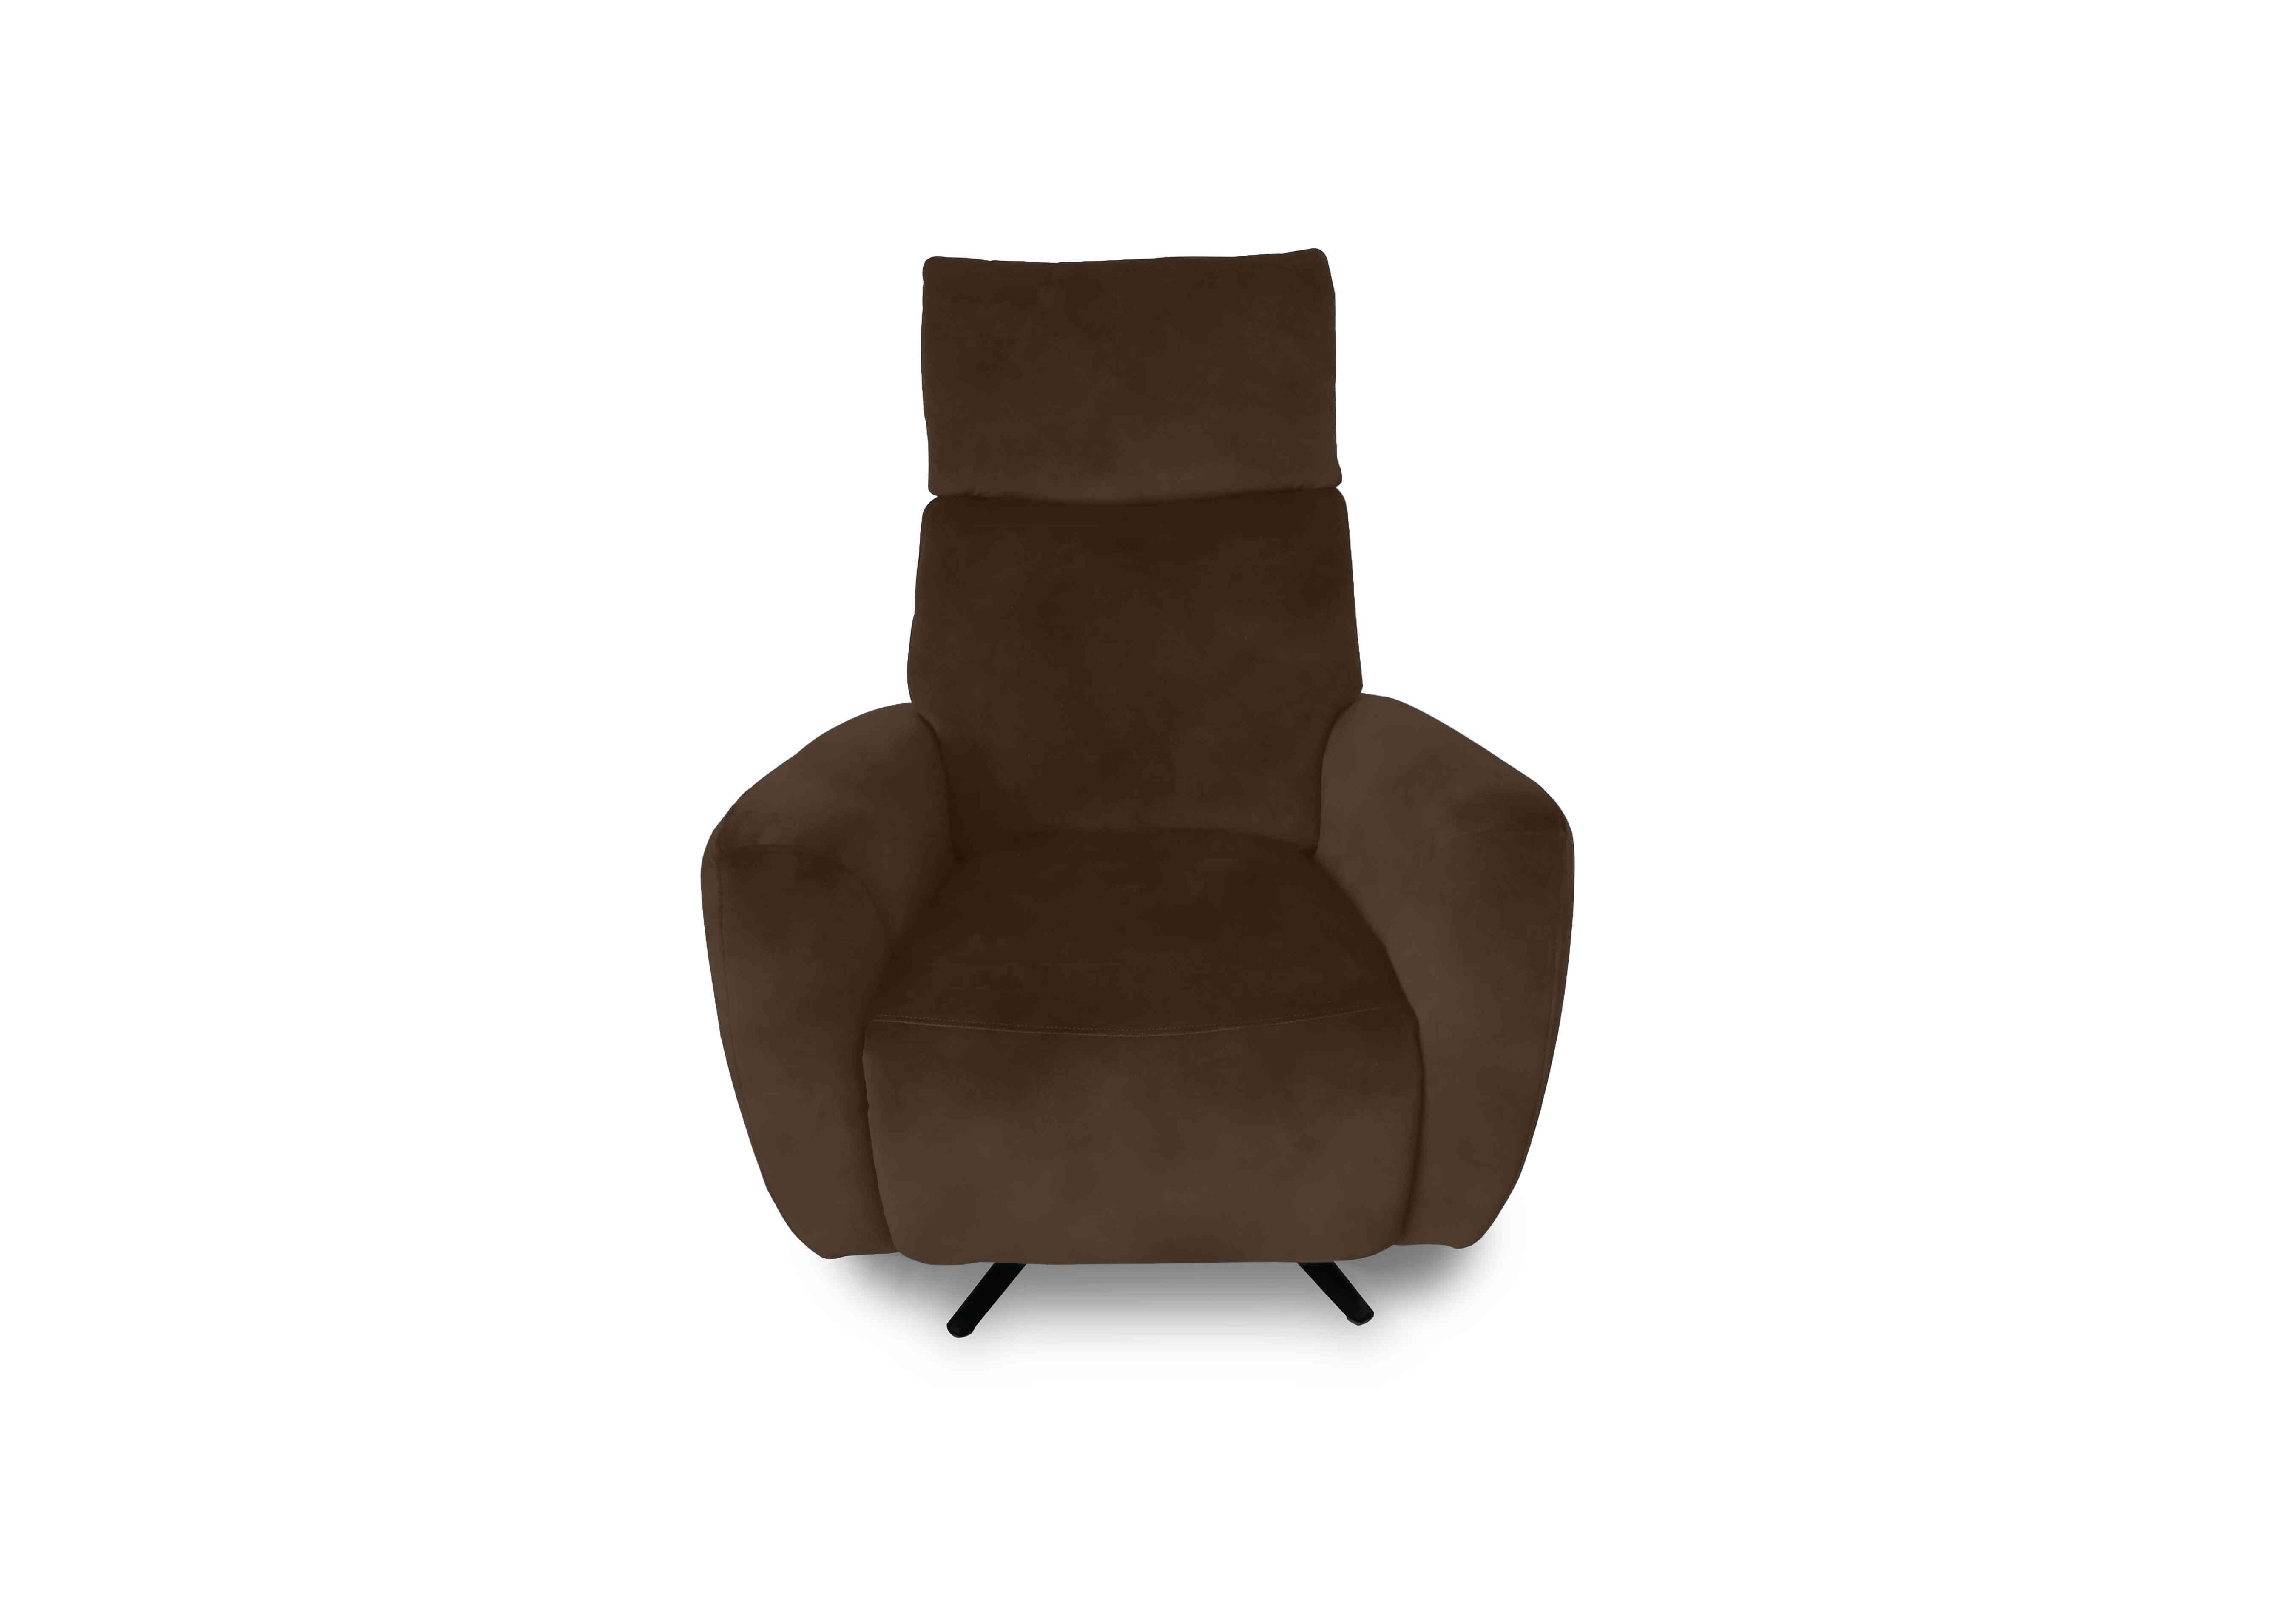 Designer Chair Collection Granada Fabric Power Recliner Swivel Chair with Massage Feature in Sfa-Pey-R04 Dark Chocolate on Furniture Village